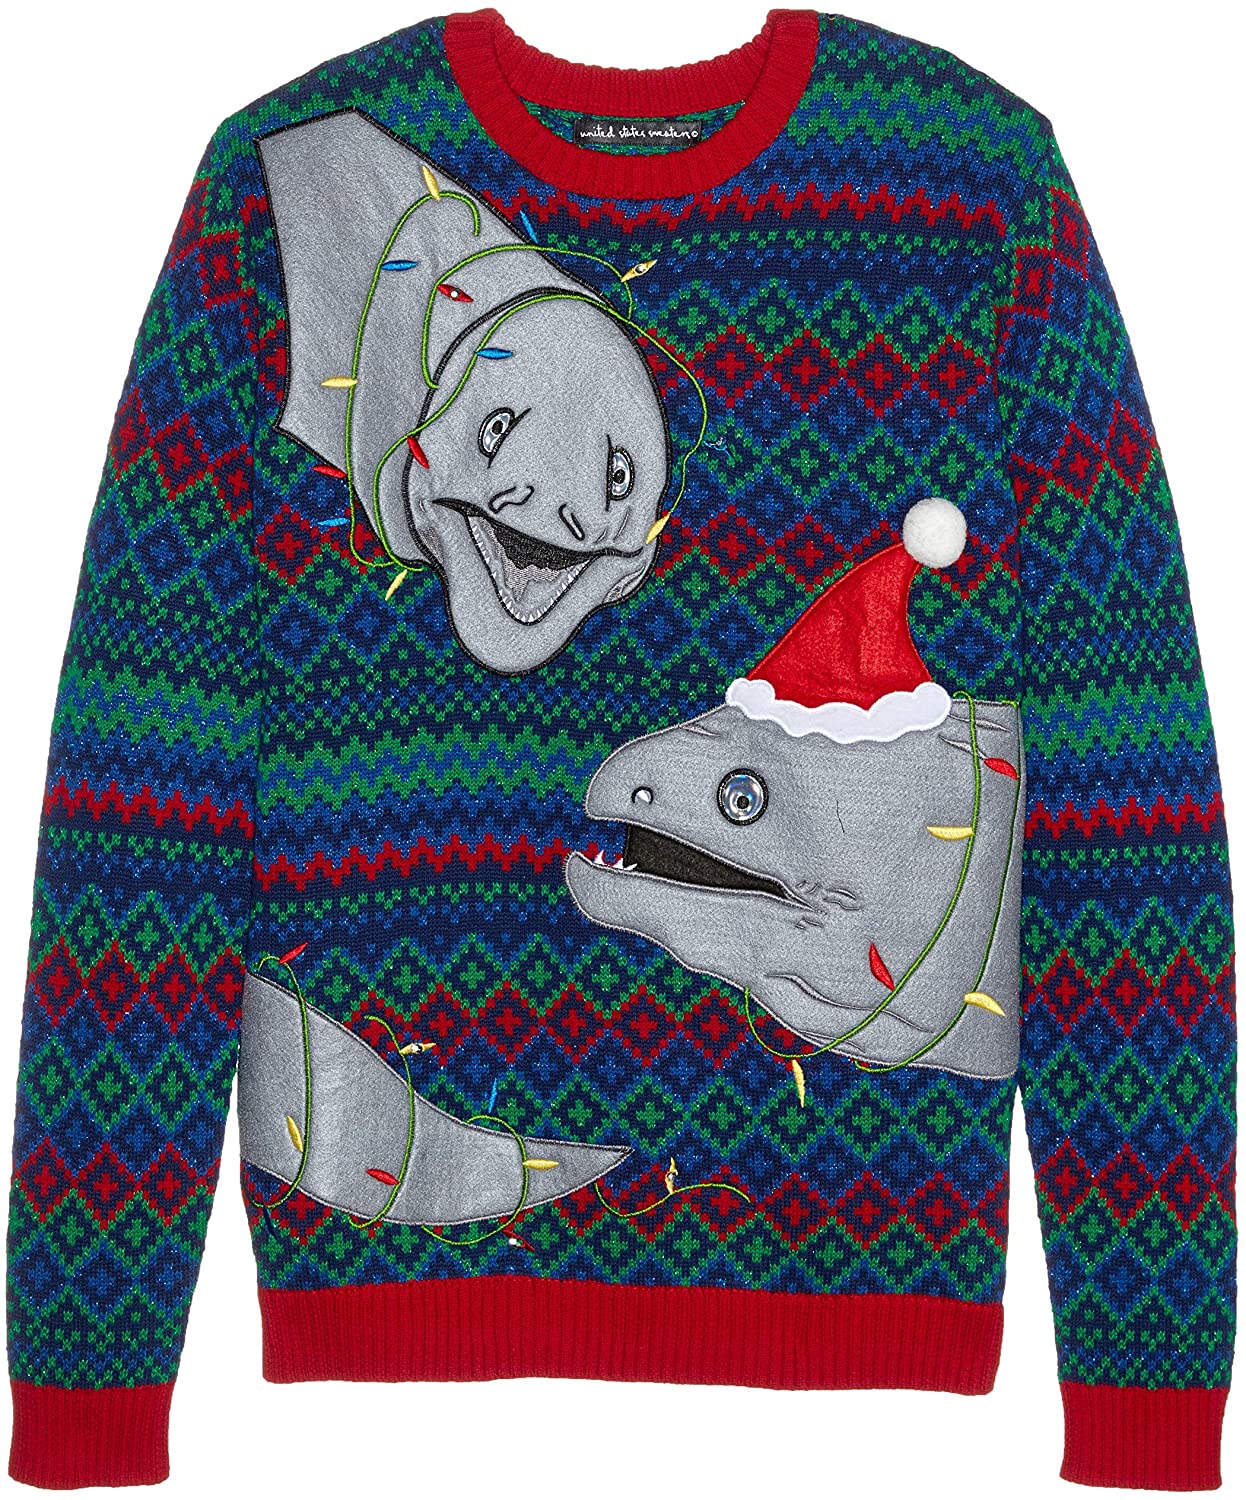 Blizzard Bay Men's Ugly Christmas Sweater Light Up